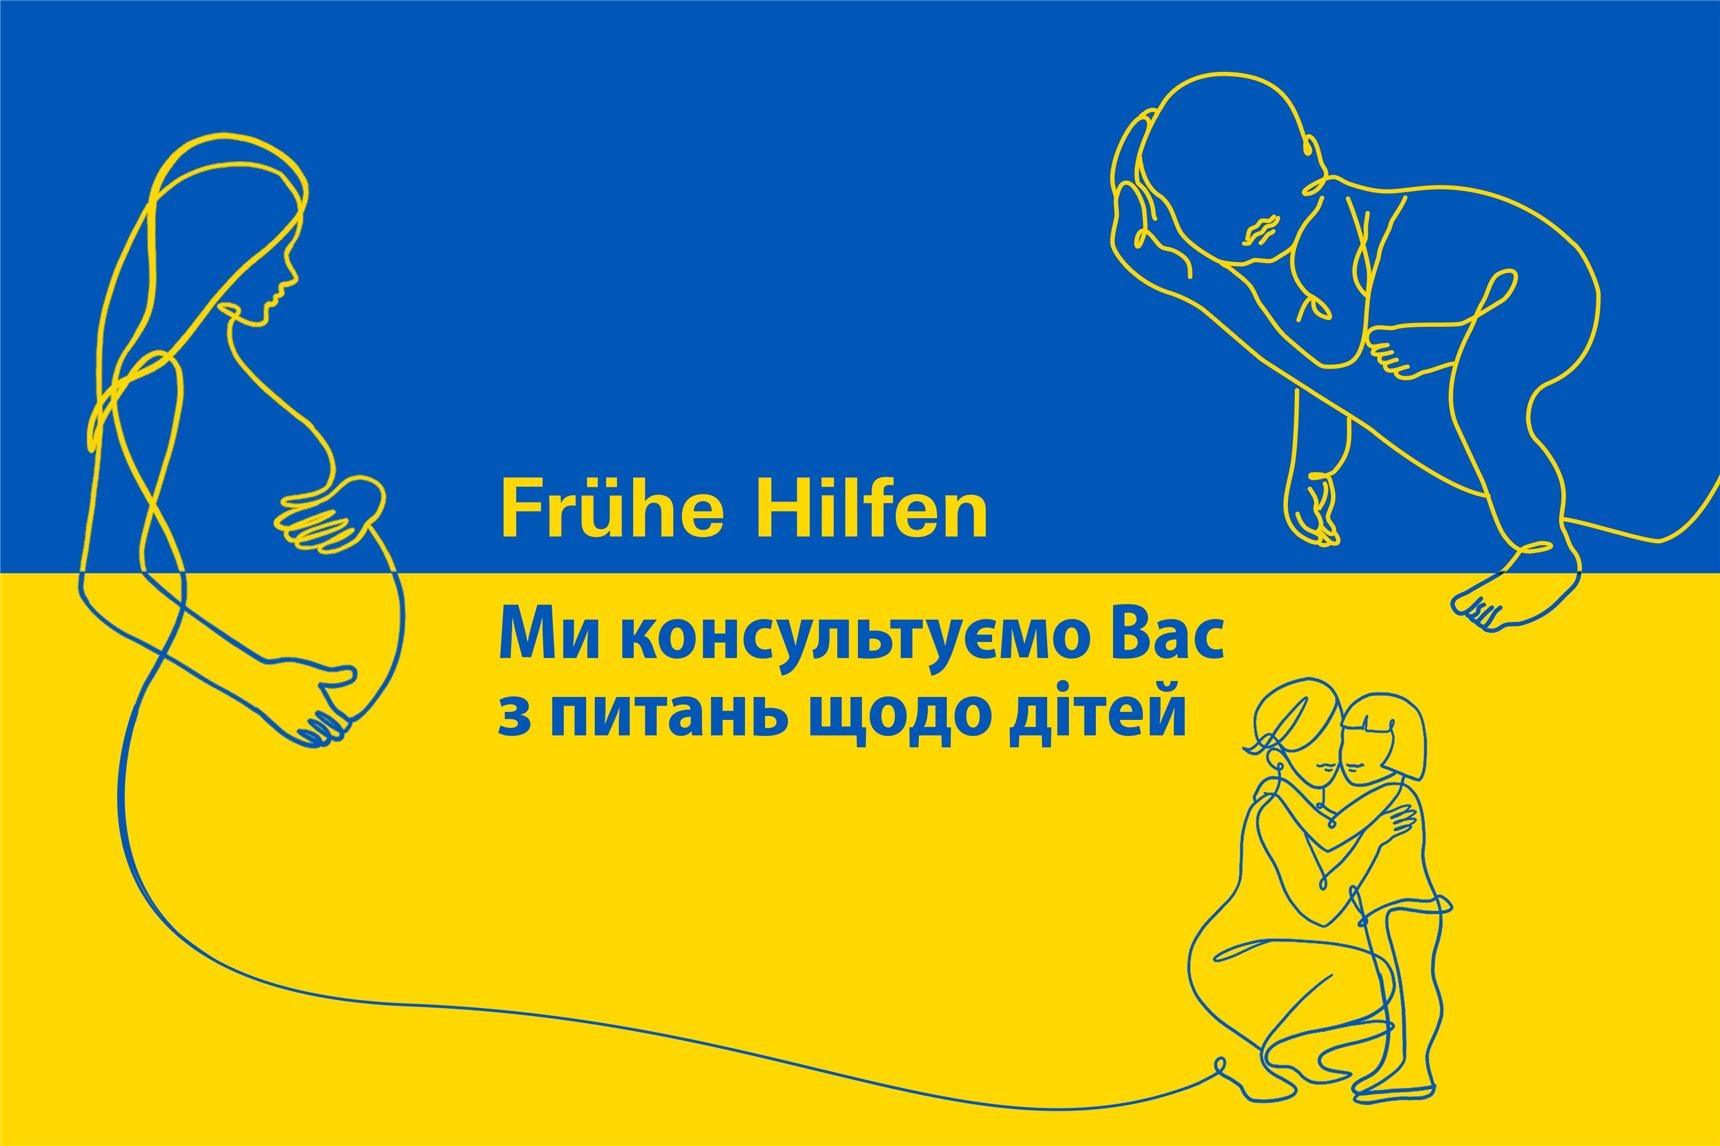 Frühe Hilfen Ukraine